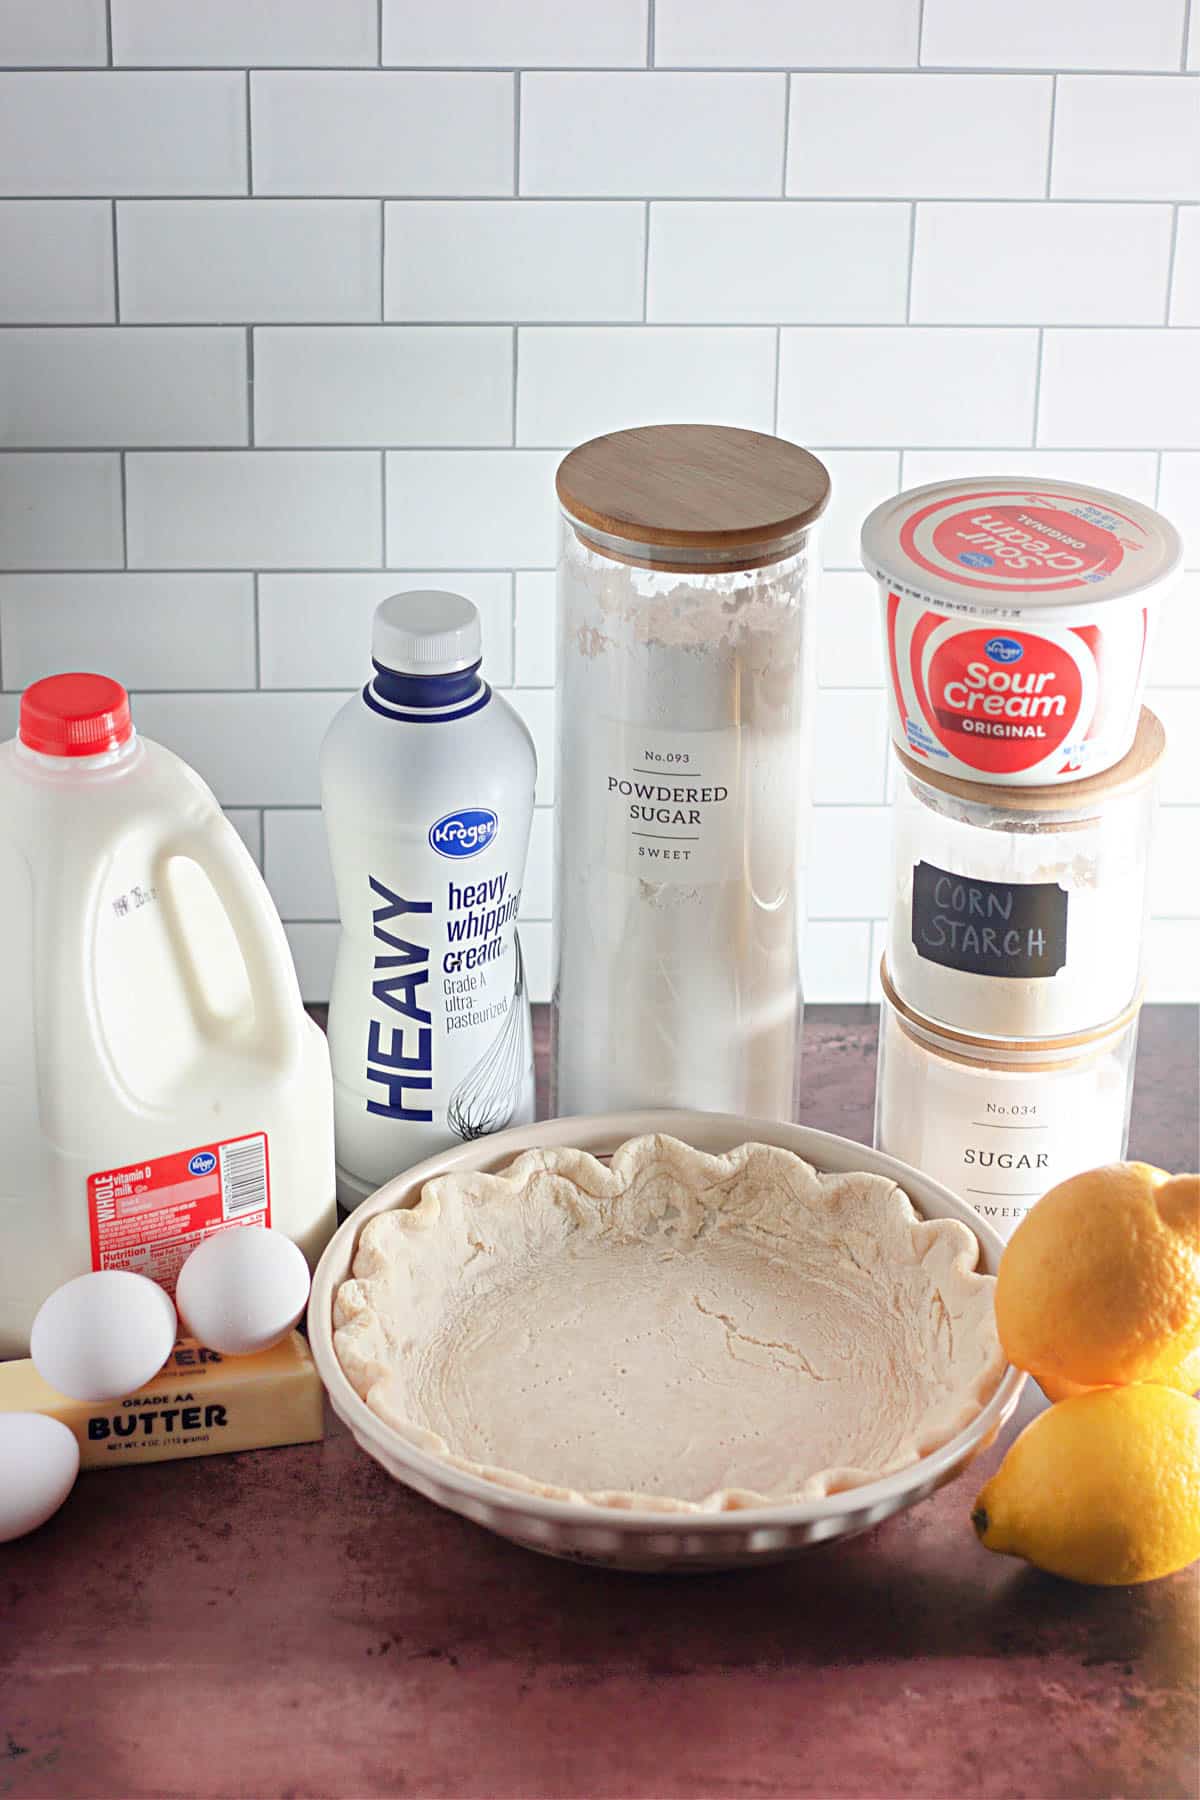 Ingredients shown for sour cream lemon pie.